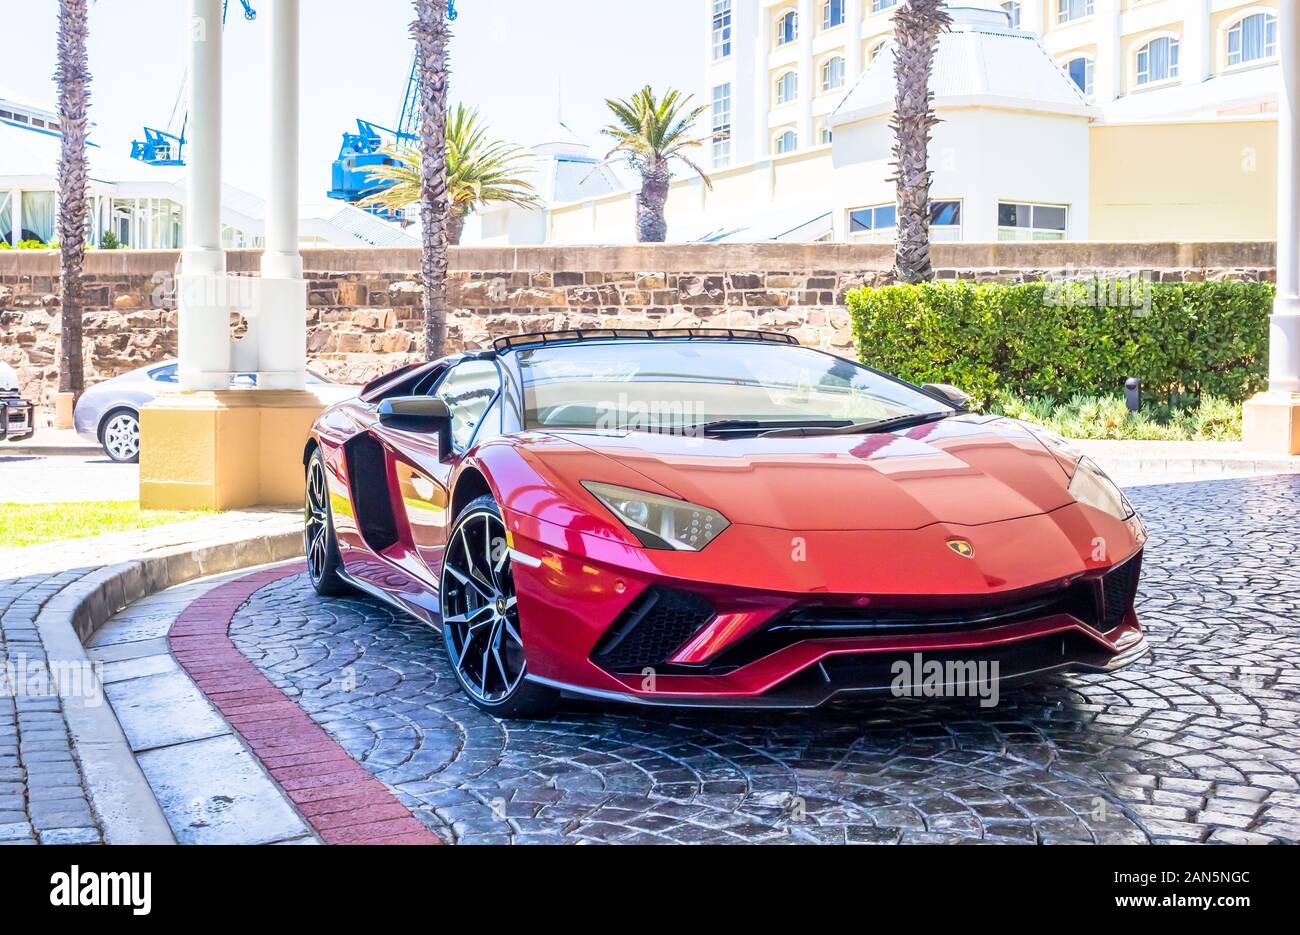 Kapstadt, Südafrika - 01. JANUAR 2019: Brandneue Lamborghini Aventador S vor der Table Bay Hotel an der V&A Waterfront in Kapstadt geparkt Stockfoto